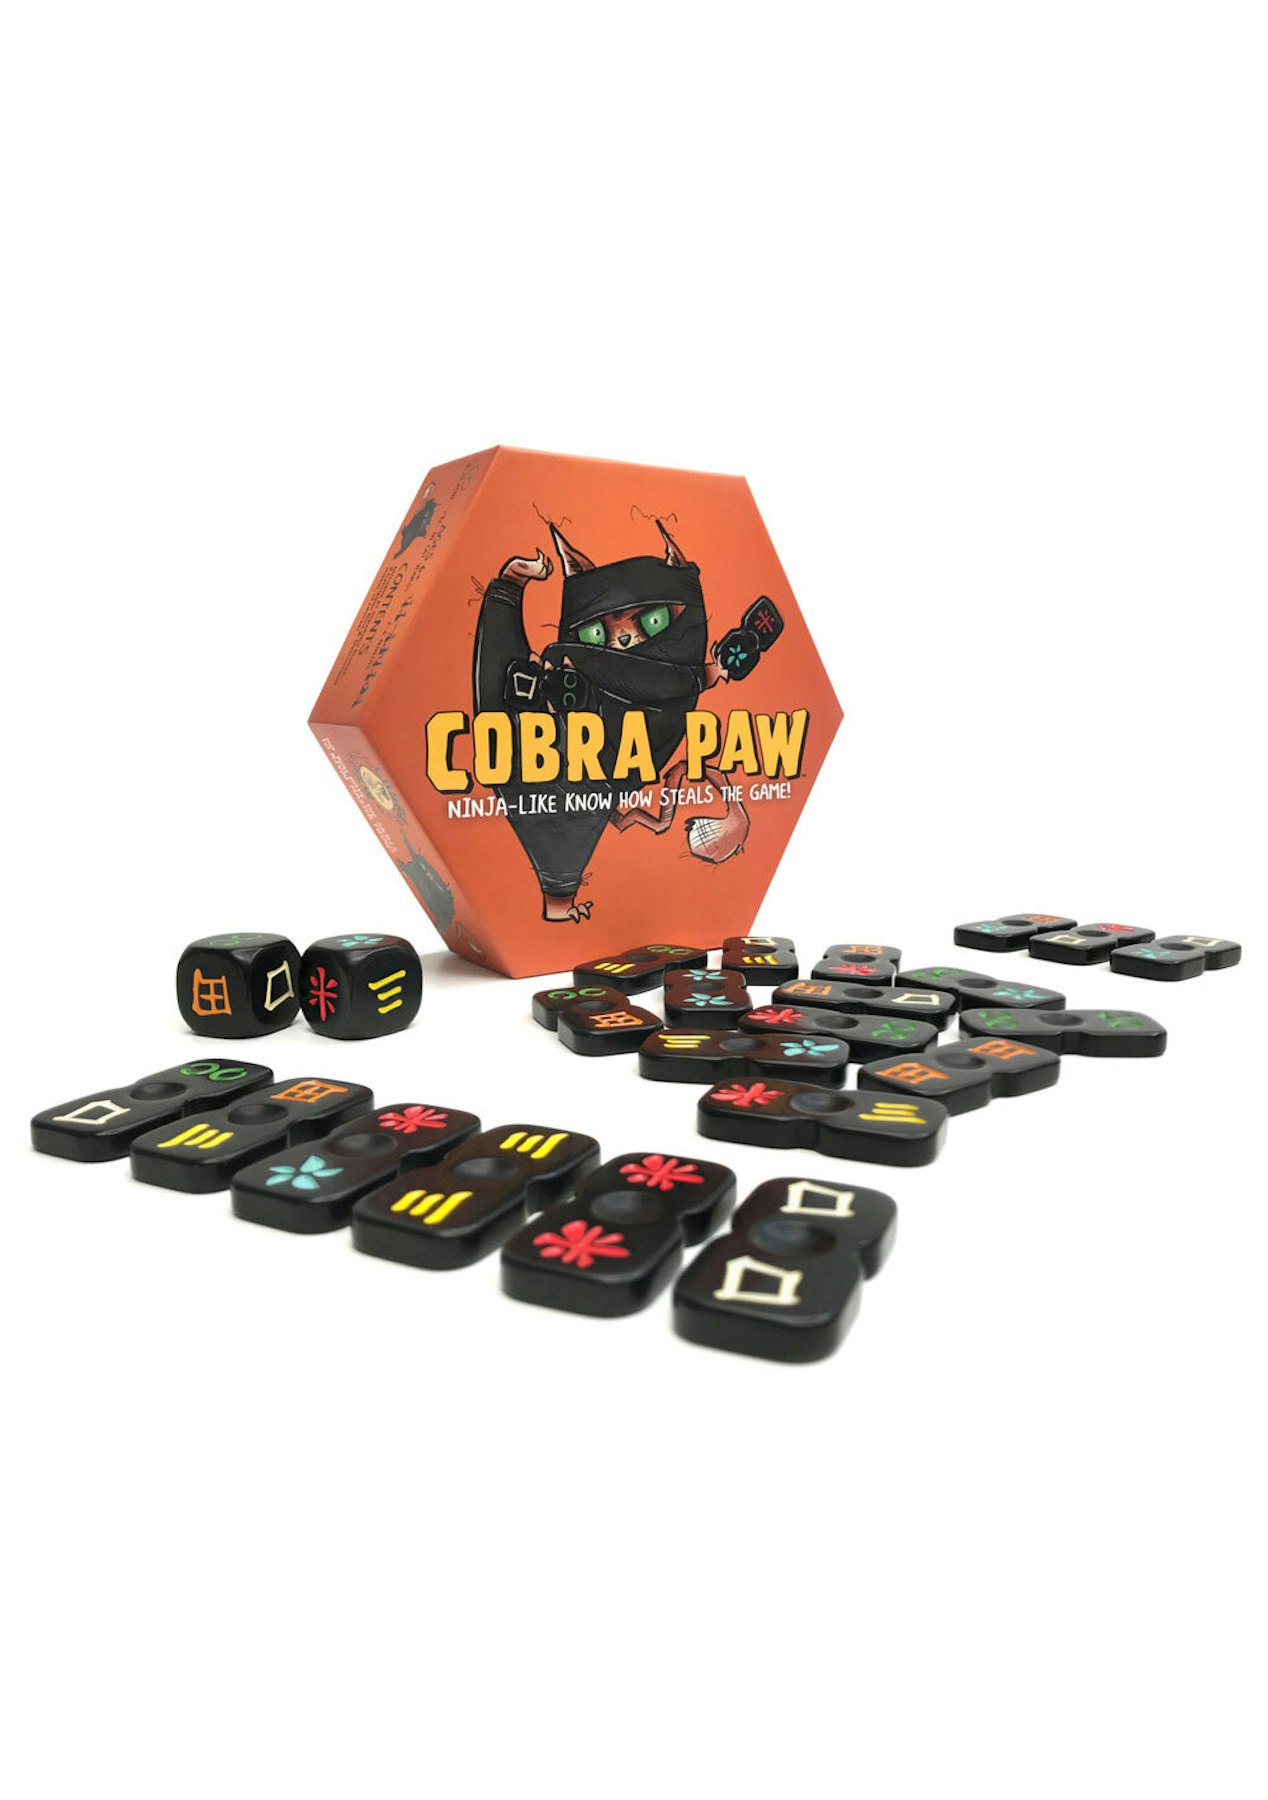 Moose Cobra Paw Dice/Tile Game Ninja-Like Play Fun Board Toy Kids/Children 8y+ 